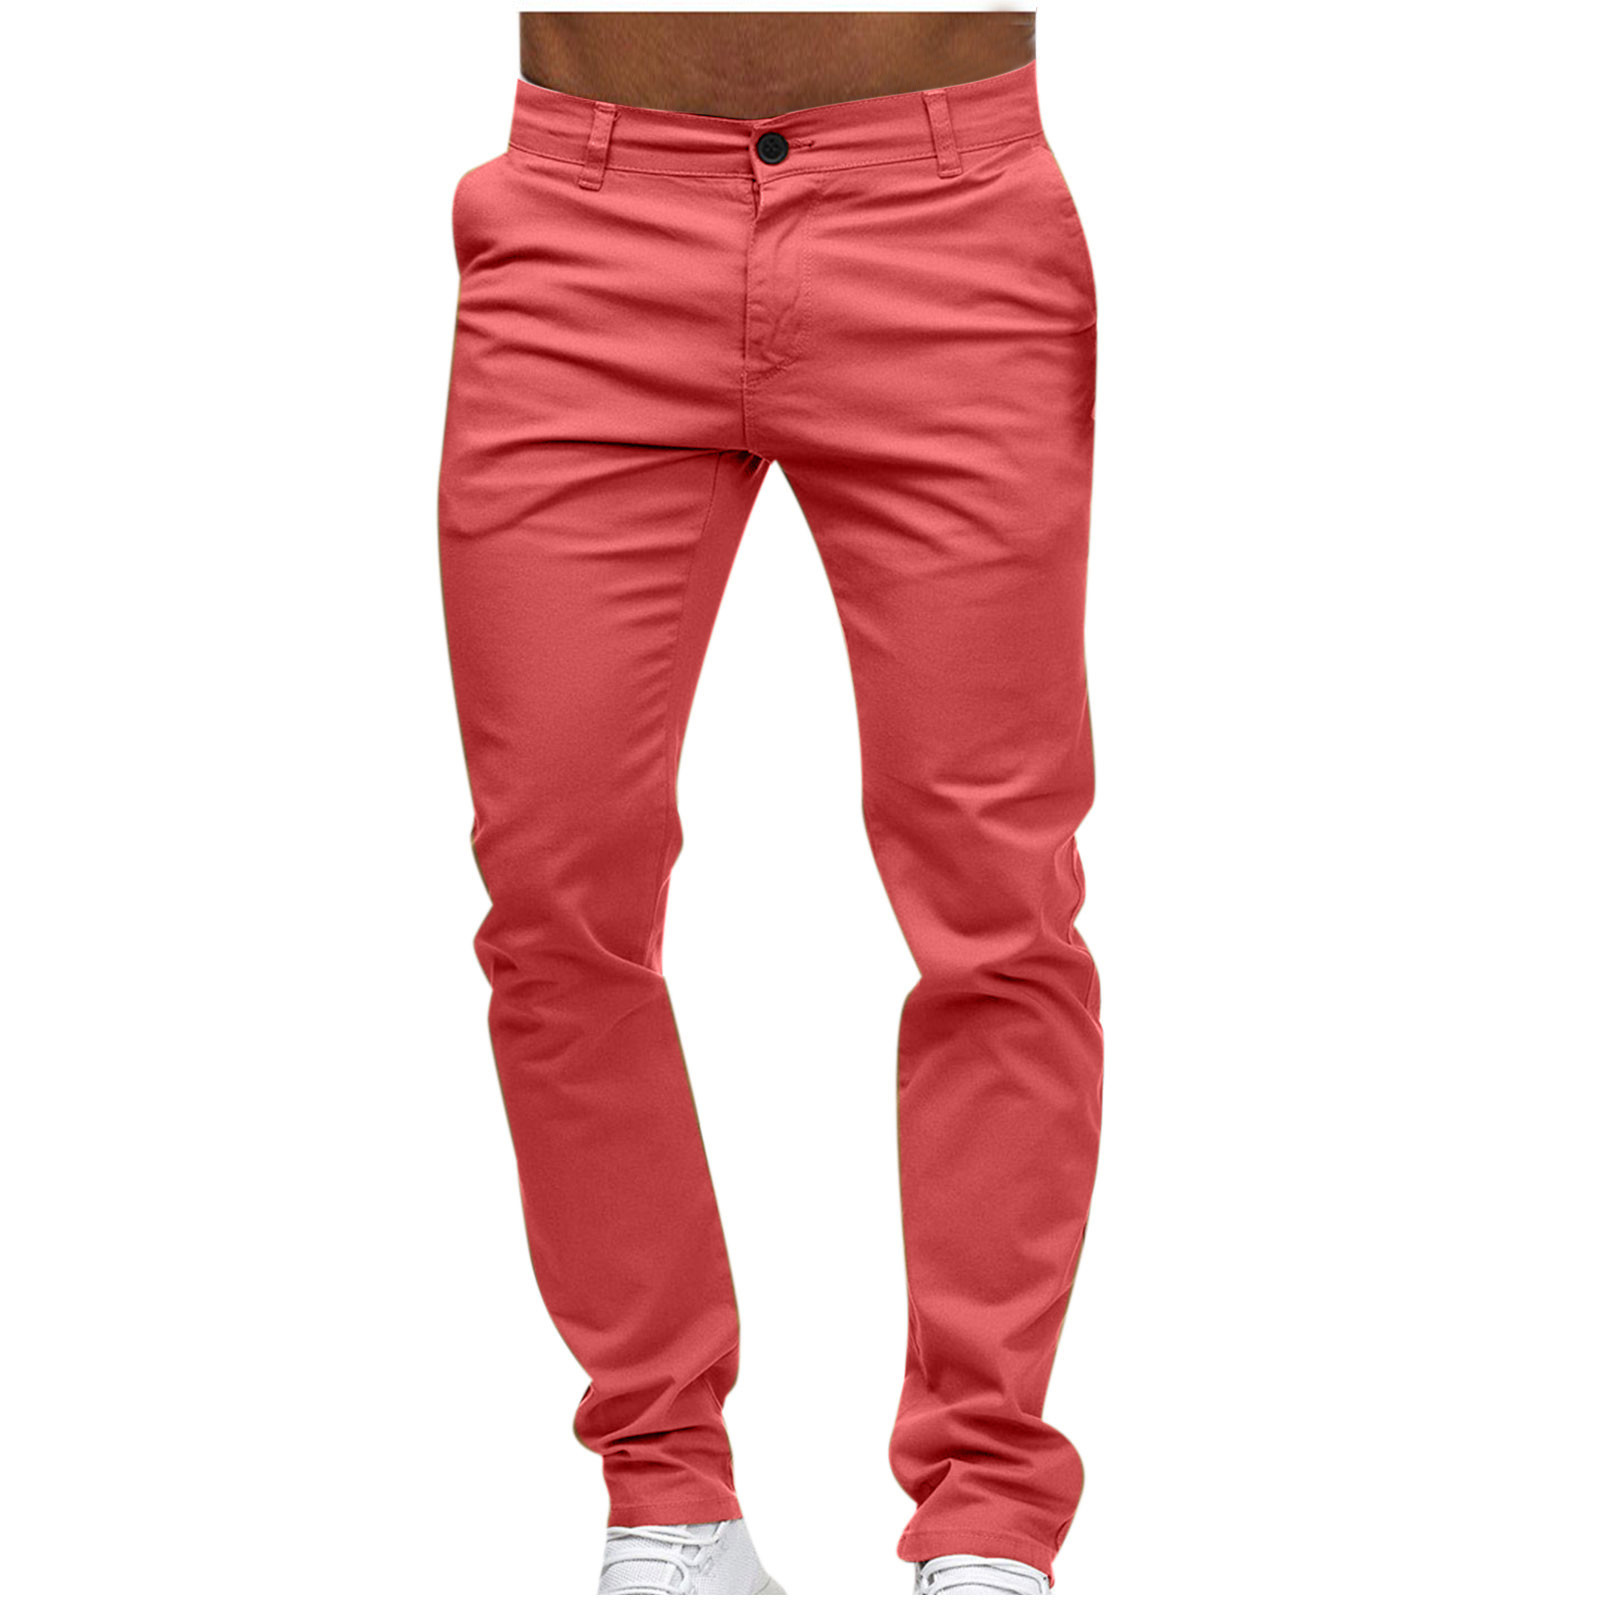 DeHolifer Mens Casual Chinos Pants Cotton Slacks Elastic Waistband Classic Fit Flat Front Khaki Pant Pink L - image 1 of 5